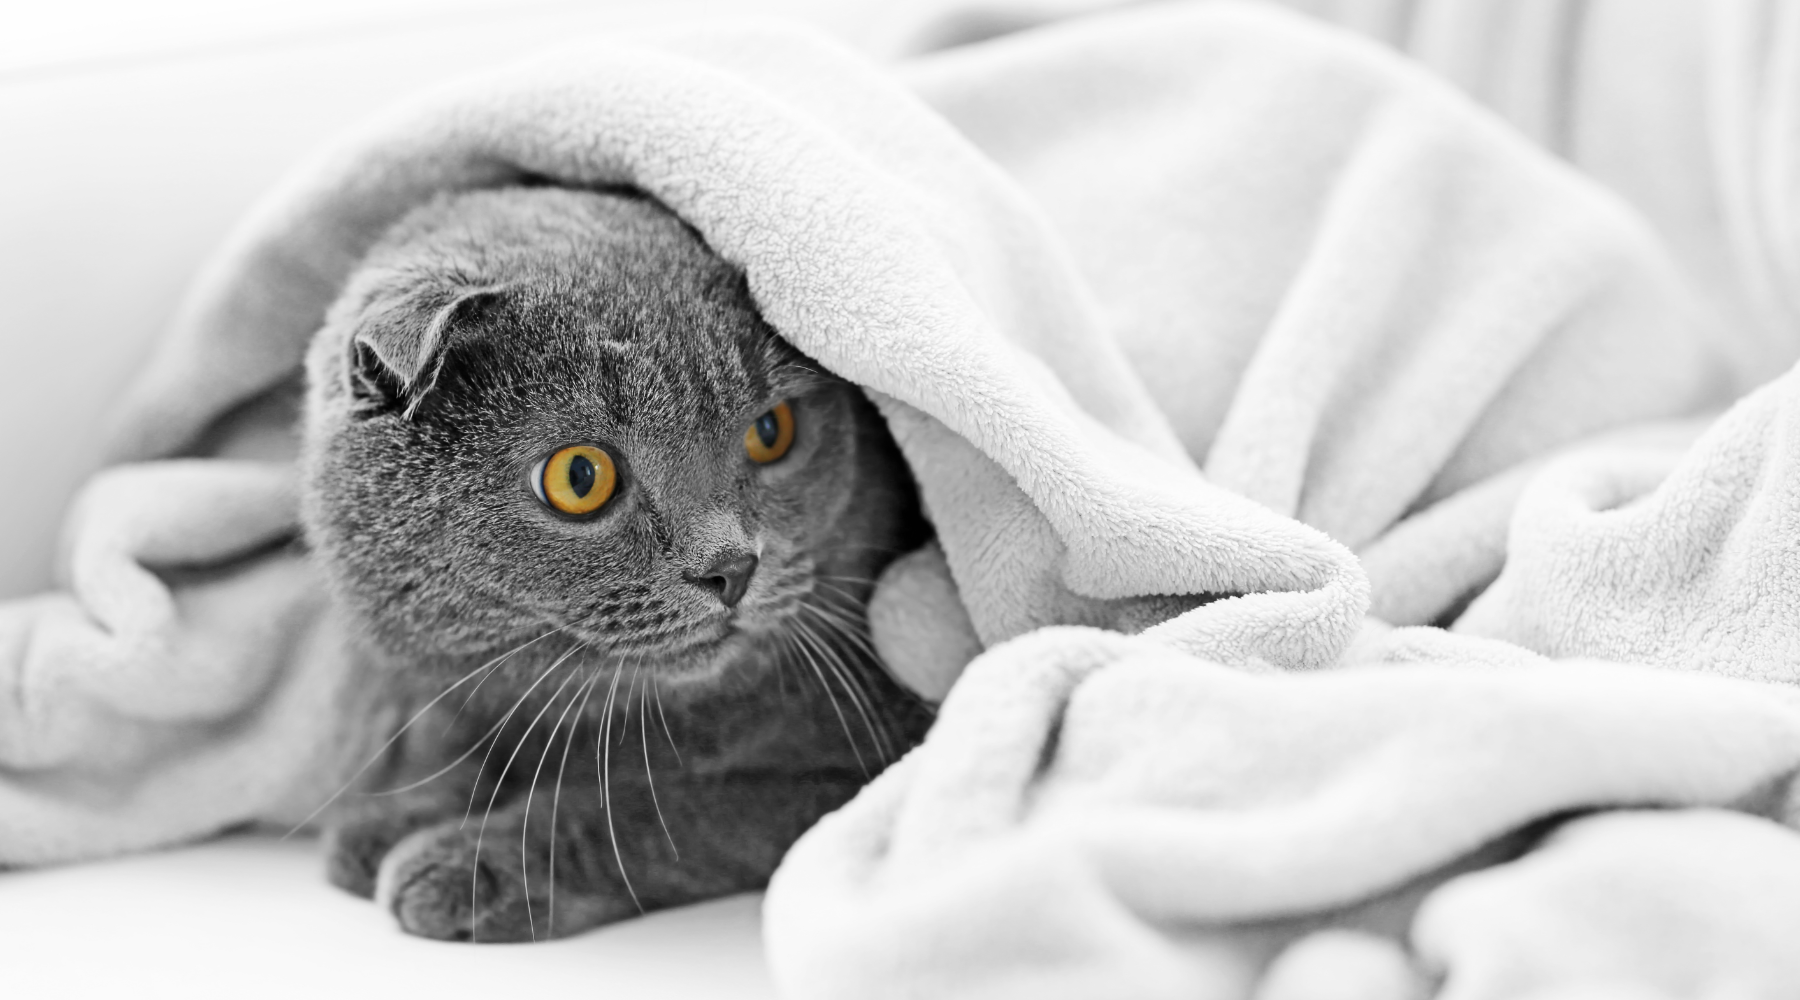 Greay cat under blanket